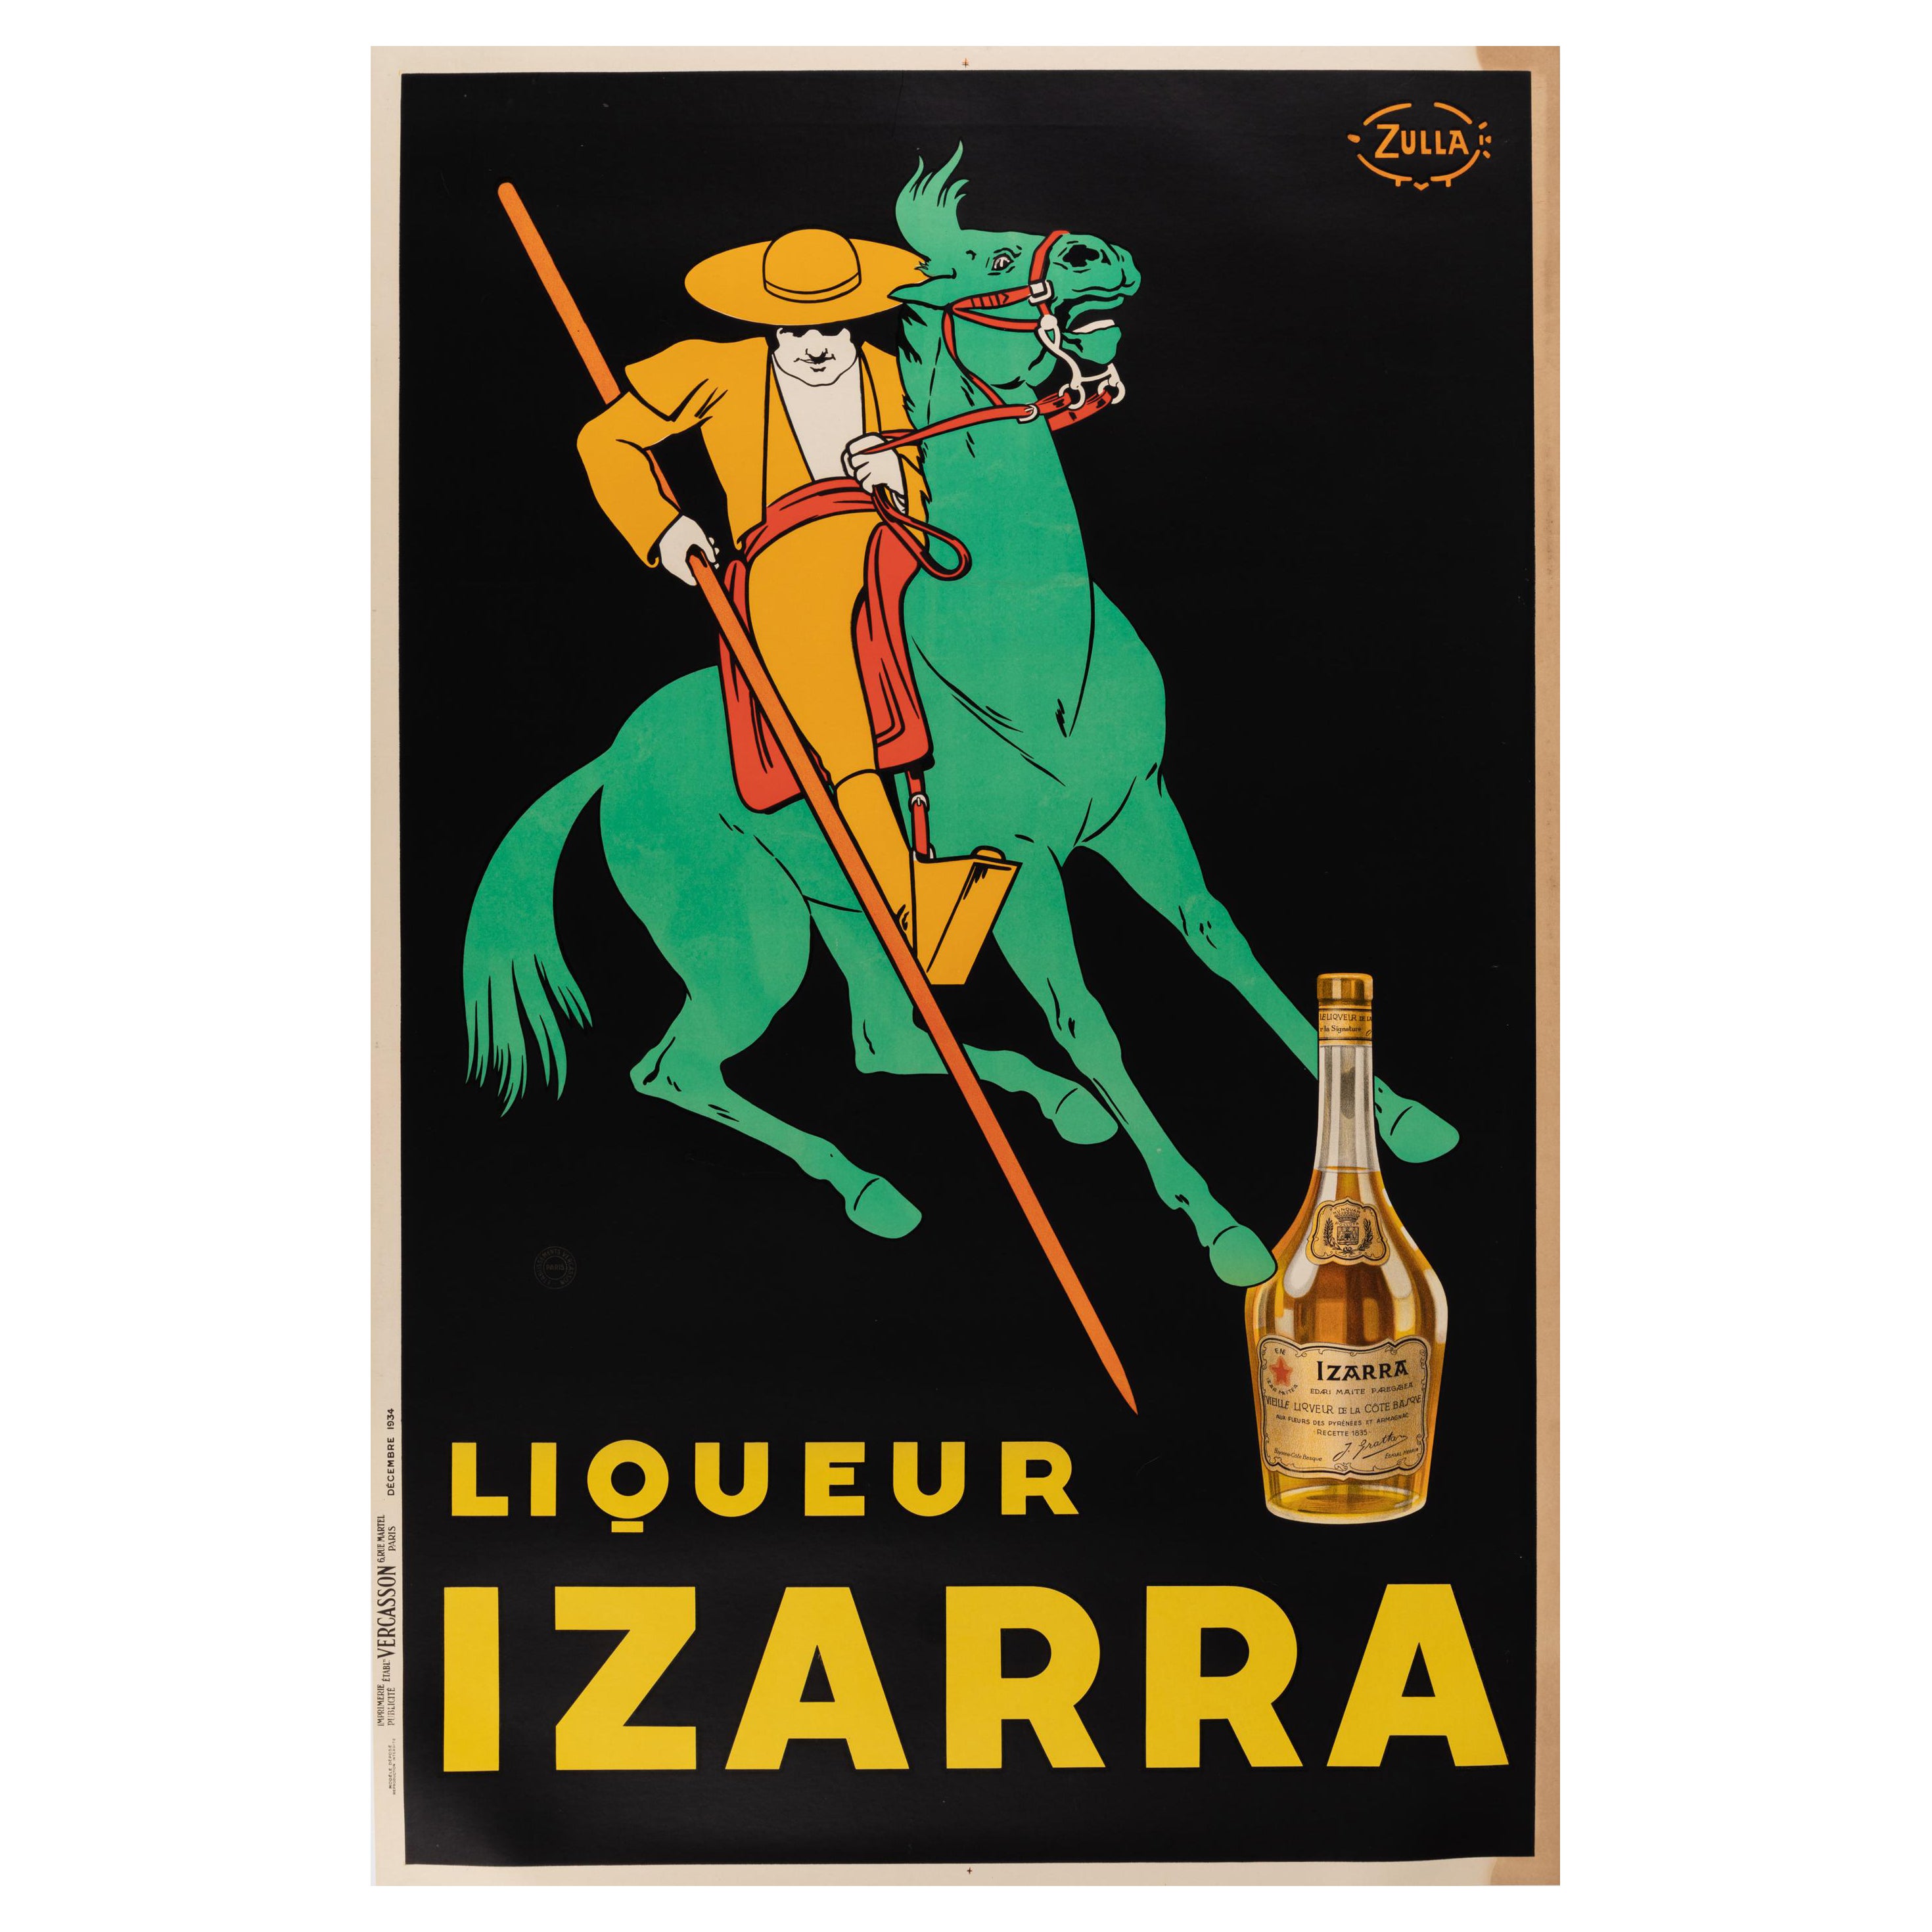 Zulla, Original Vintage Poster, Izarra Liquor, Basque Country, Armagnac, 1934 For Sale